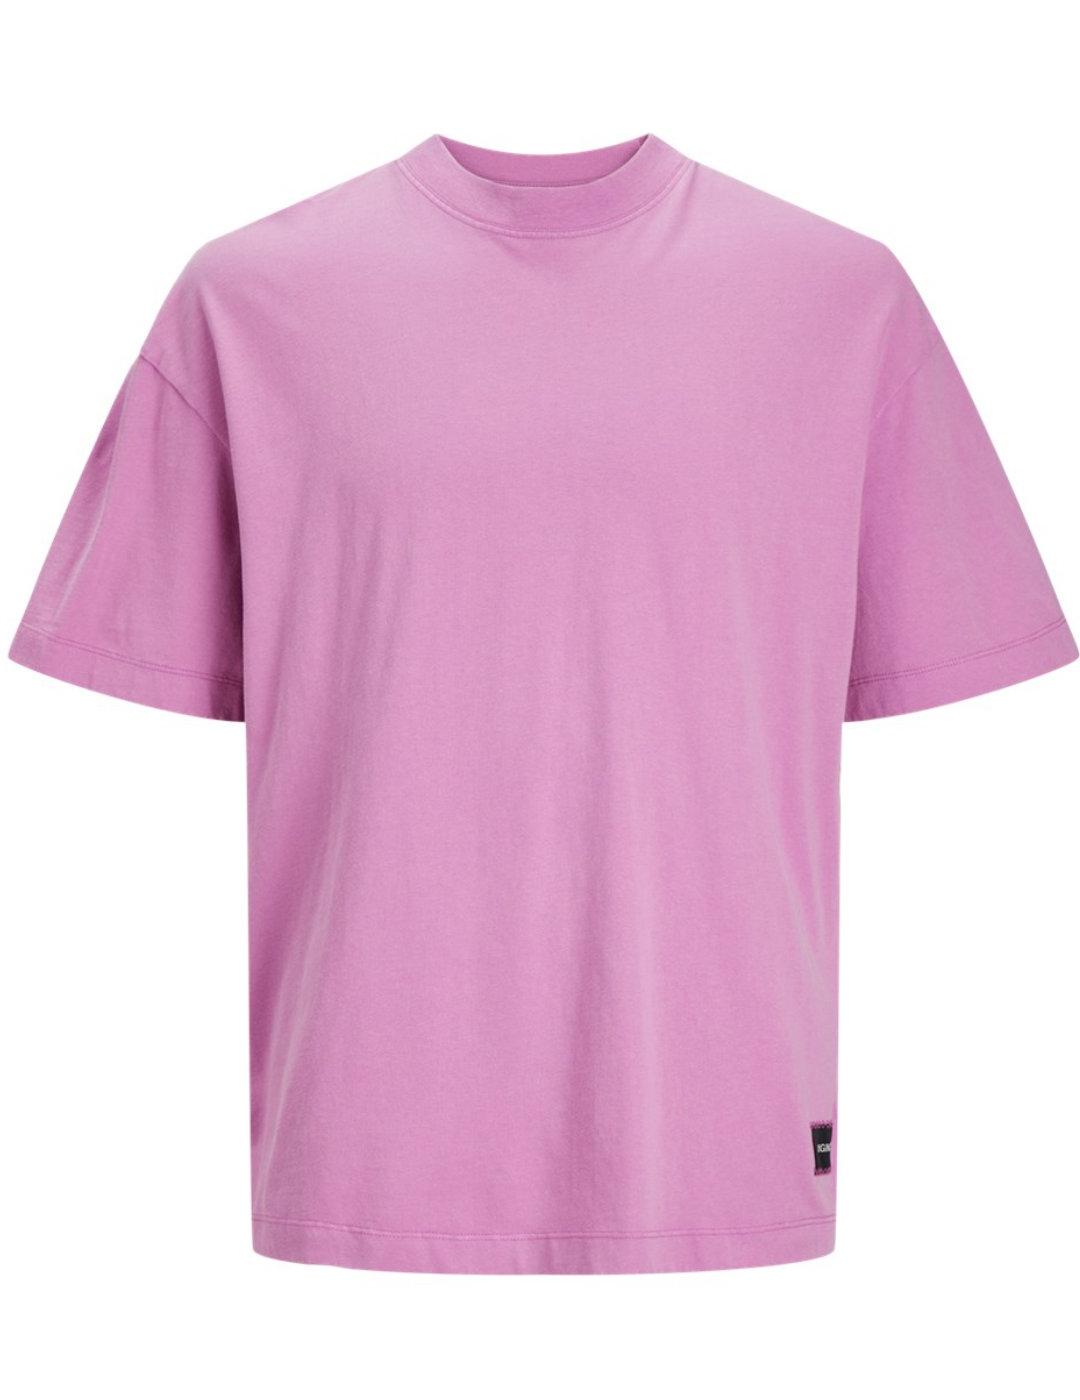 Camiseta Jack&Jones Grand rosa manga corta para hombre